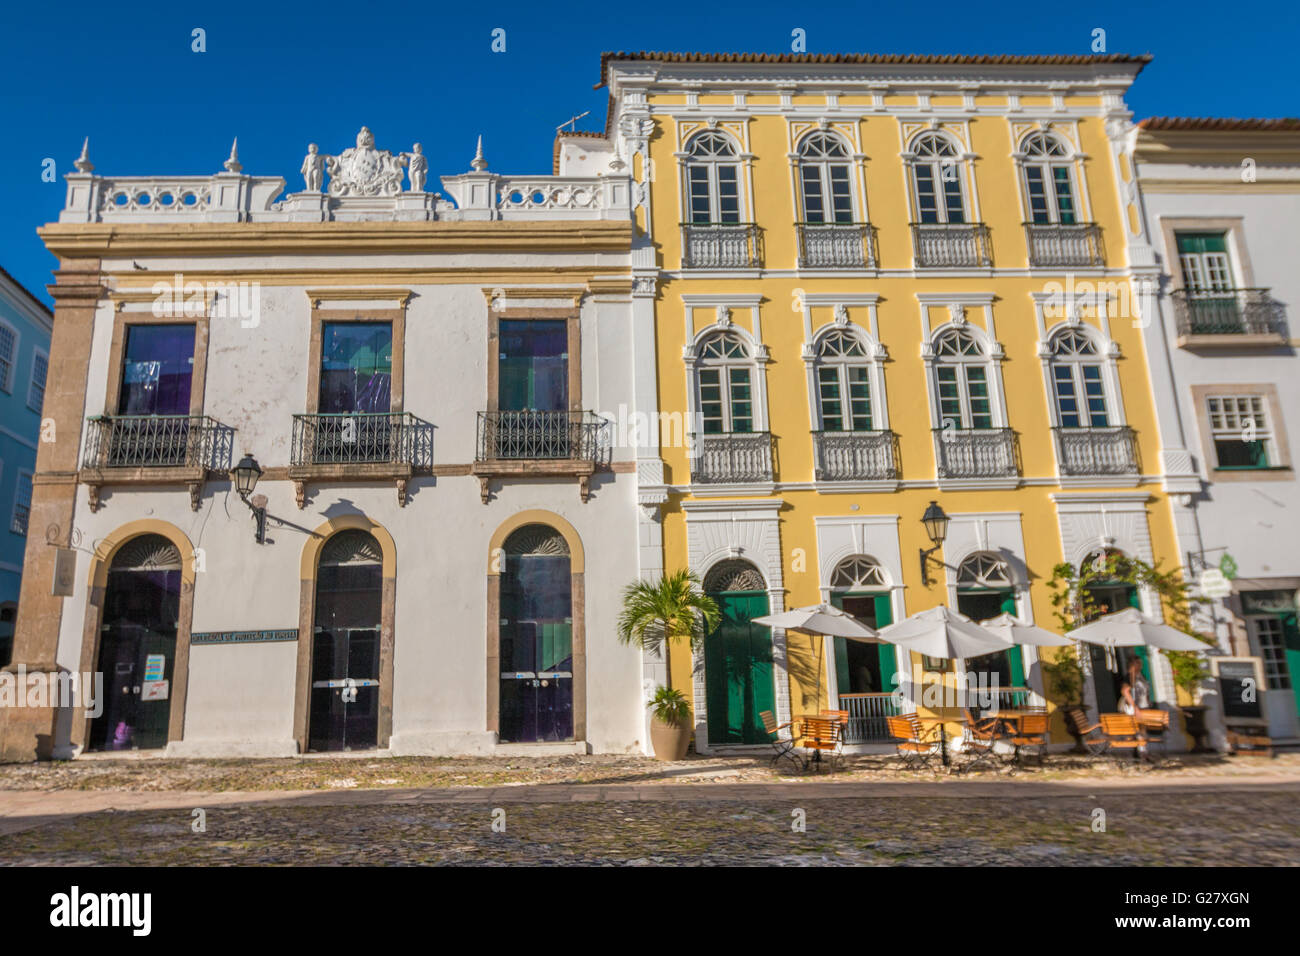 Old town buildings in Salvador de Bahia Brazil Stock Photo